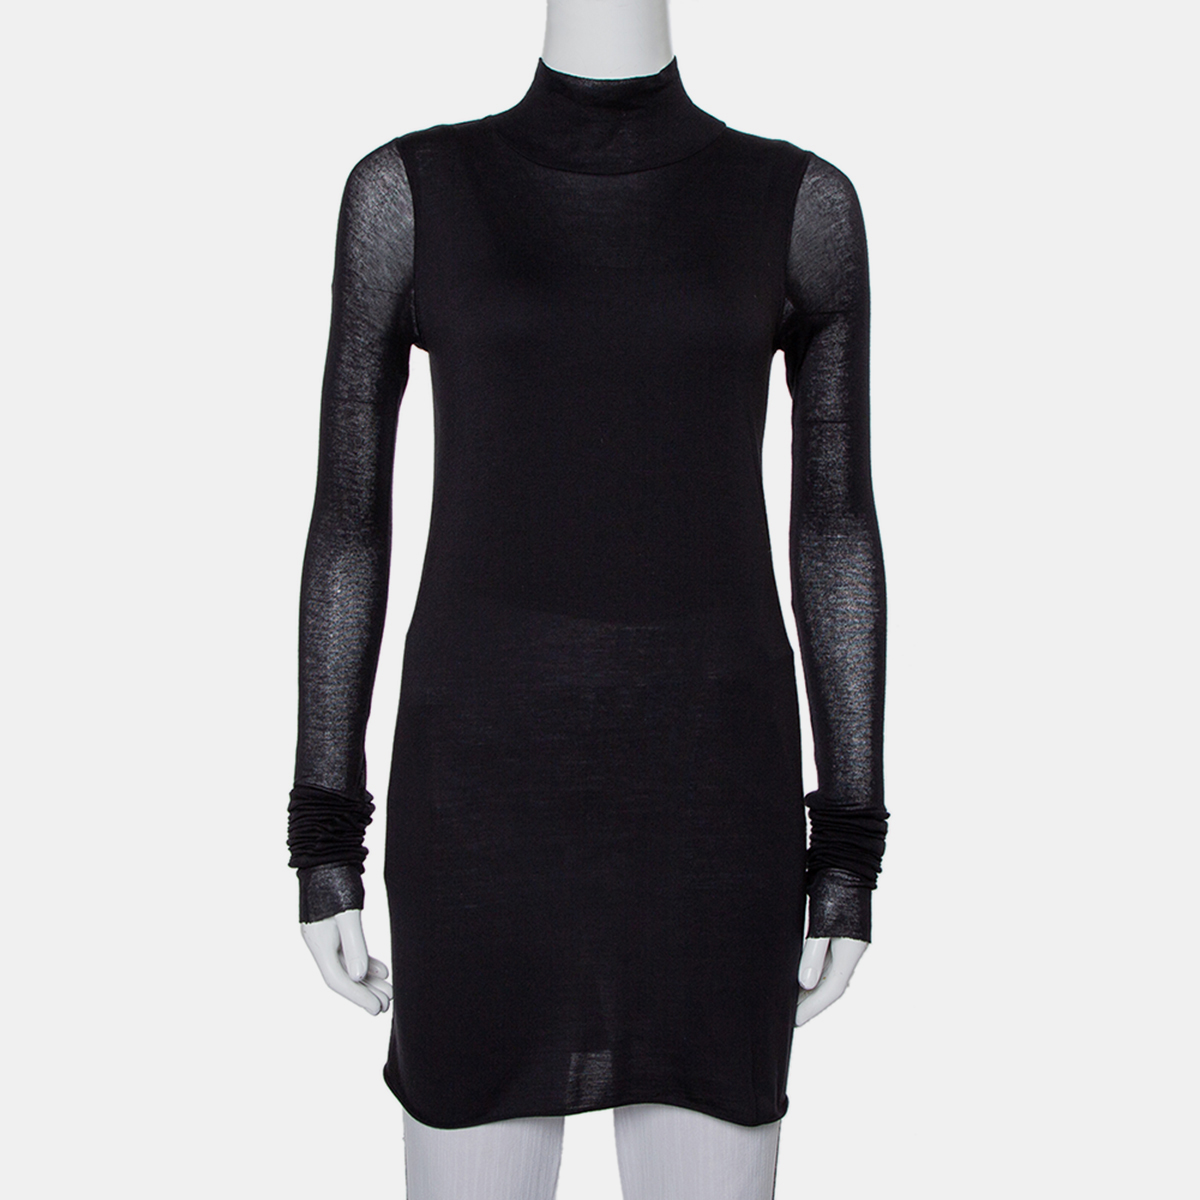 Rickowenslilies black knit turtleneck long sleeve mini dress m